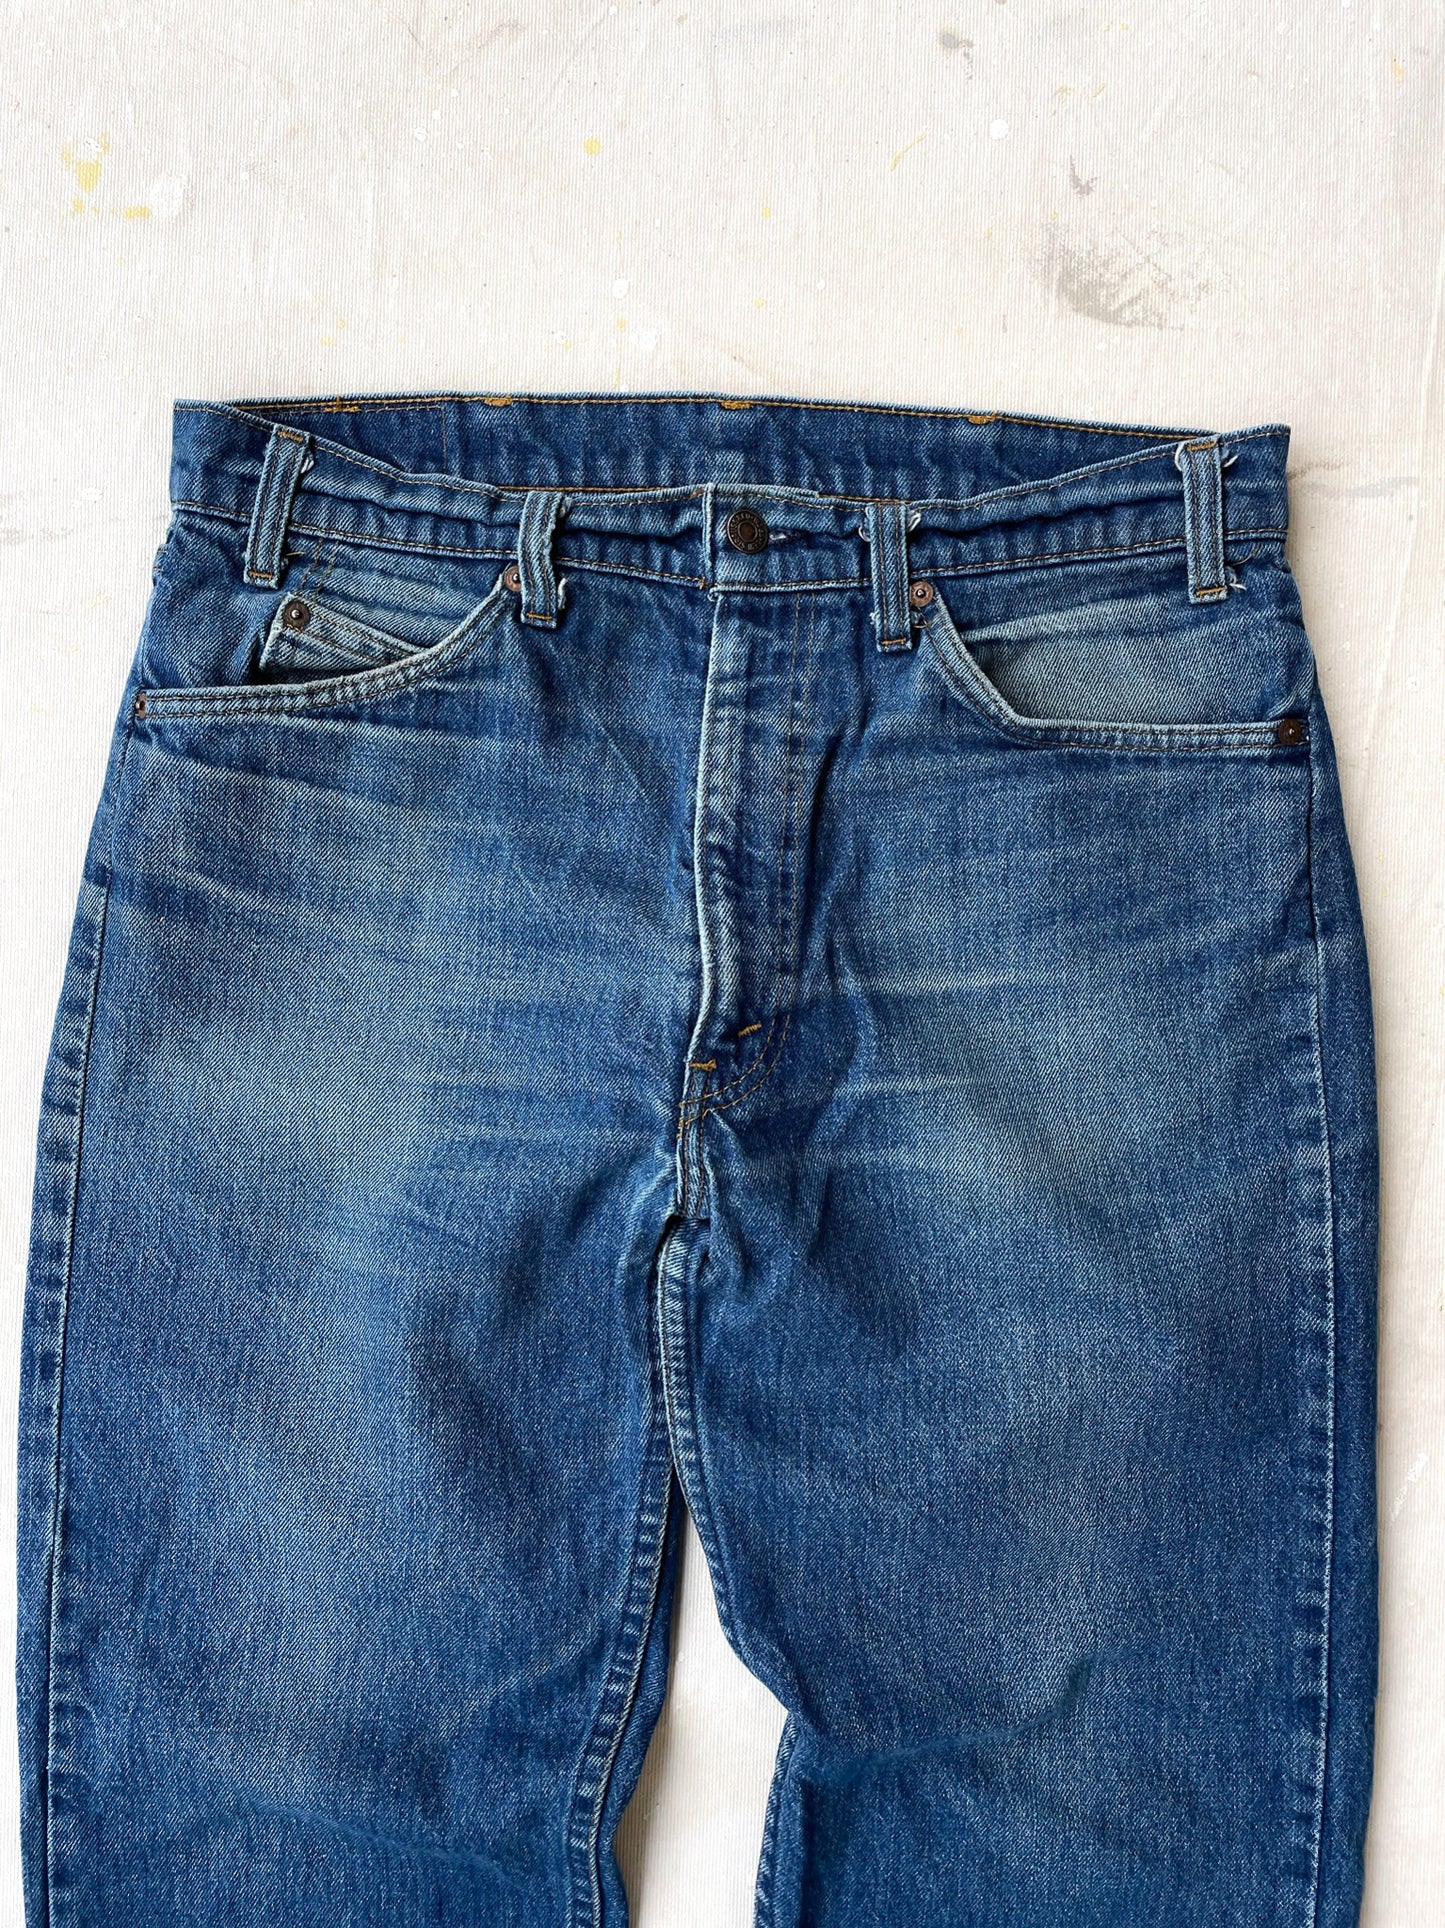 Levi's 505 Orange Tab Jeans—[32x28]